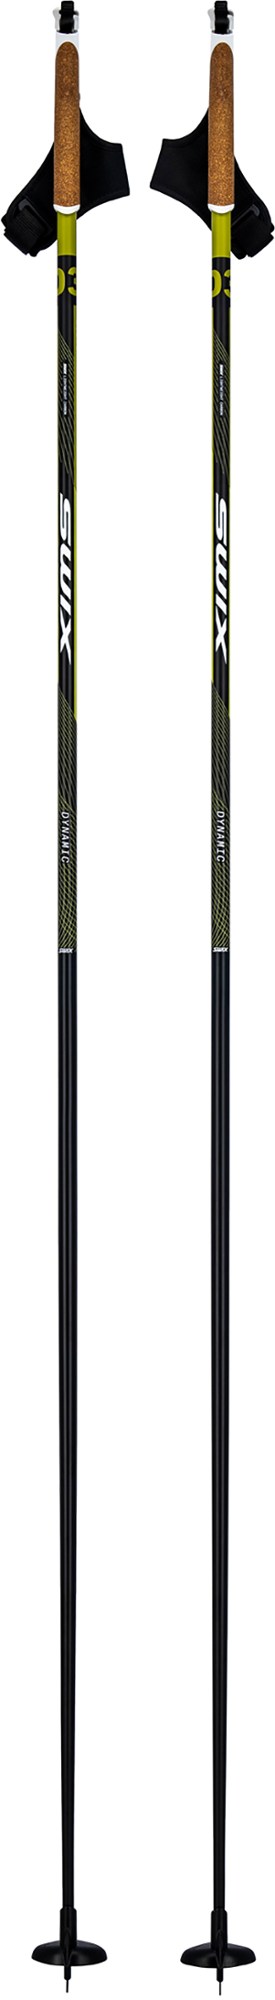 цена Палки для беговых лыж Dynamic D3 Swix, черный